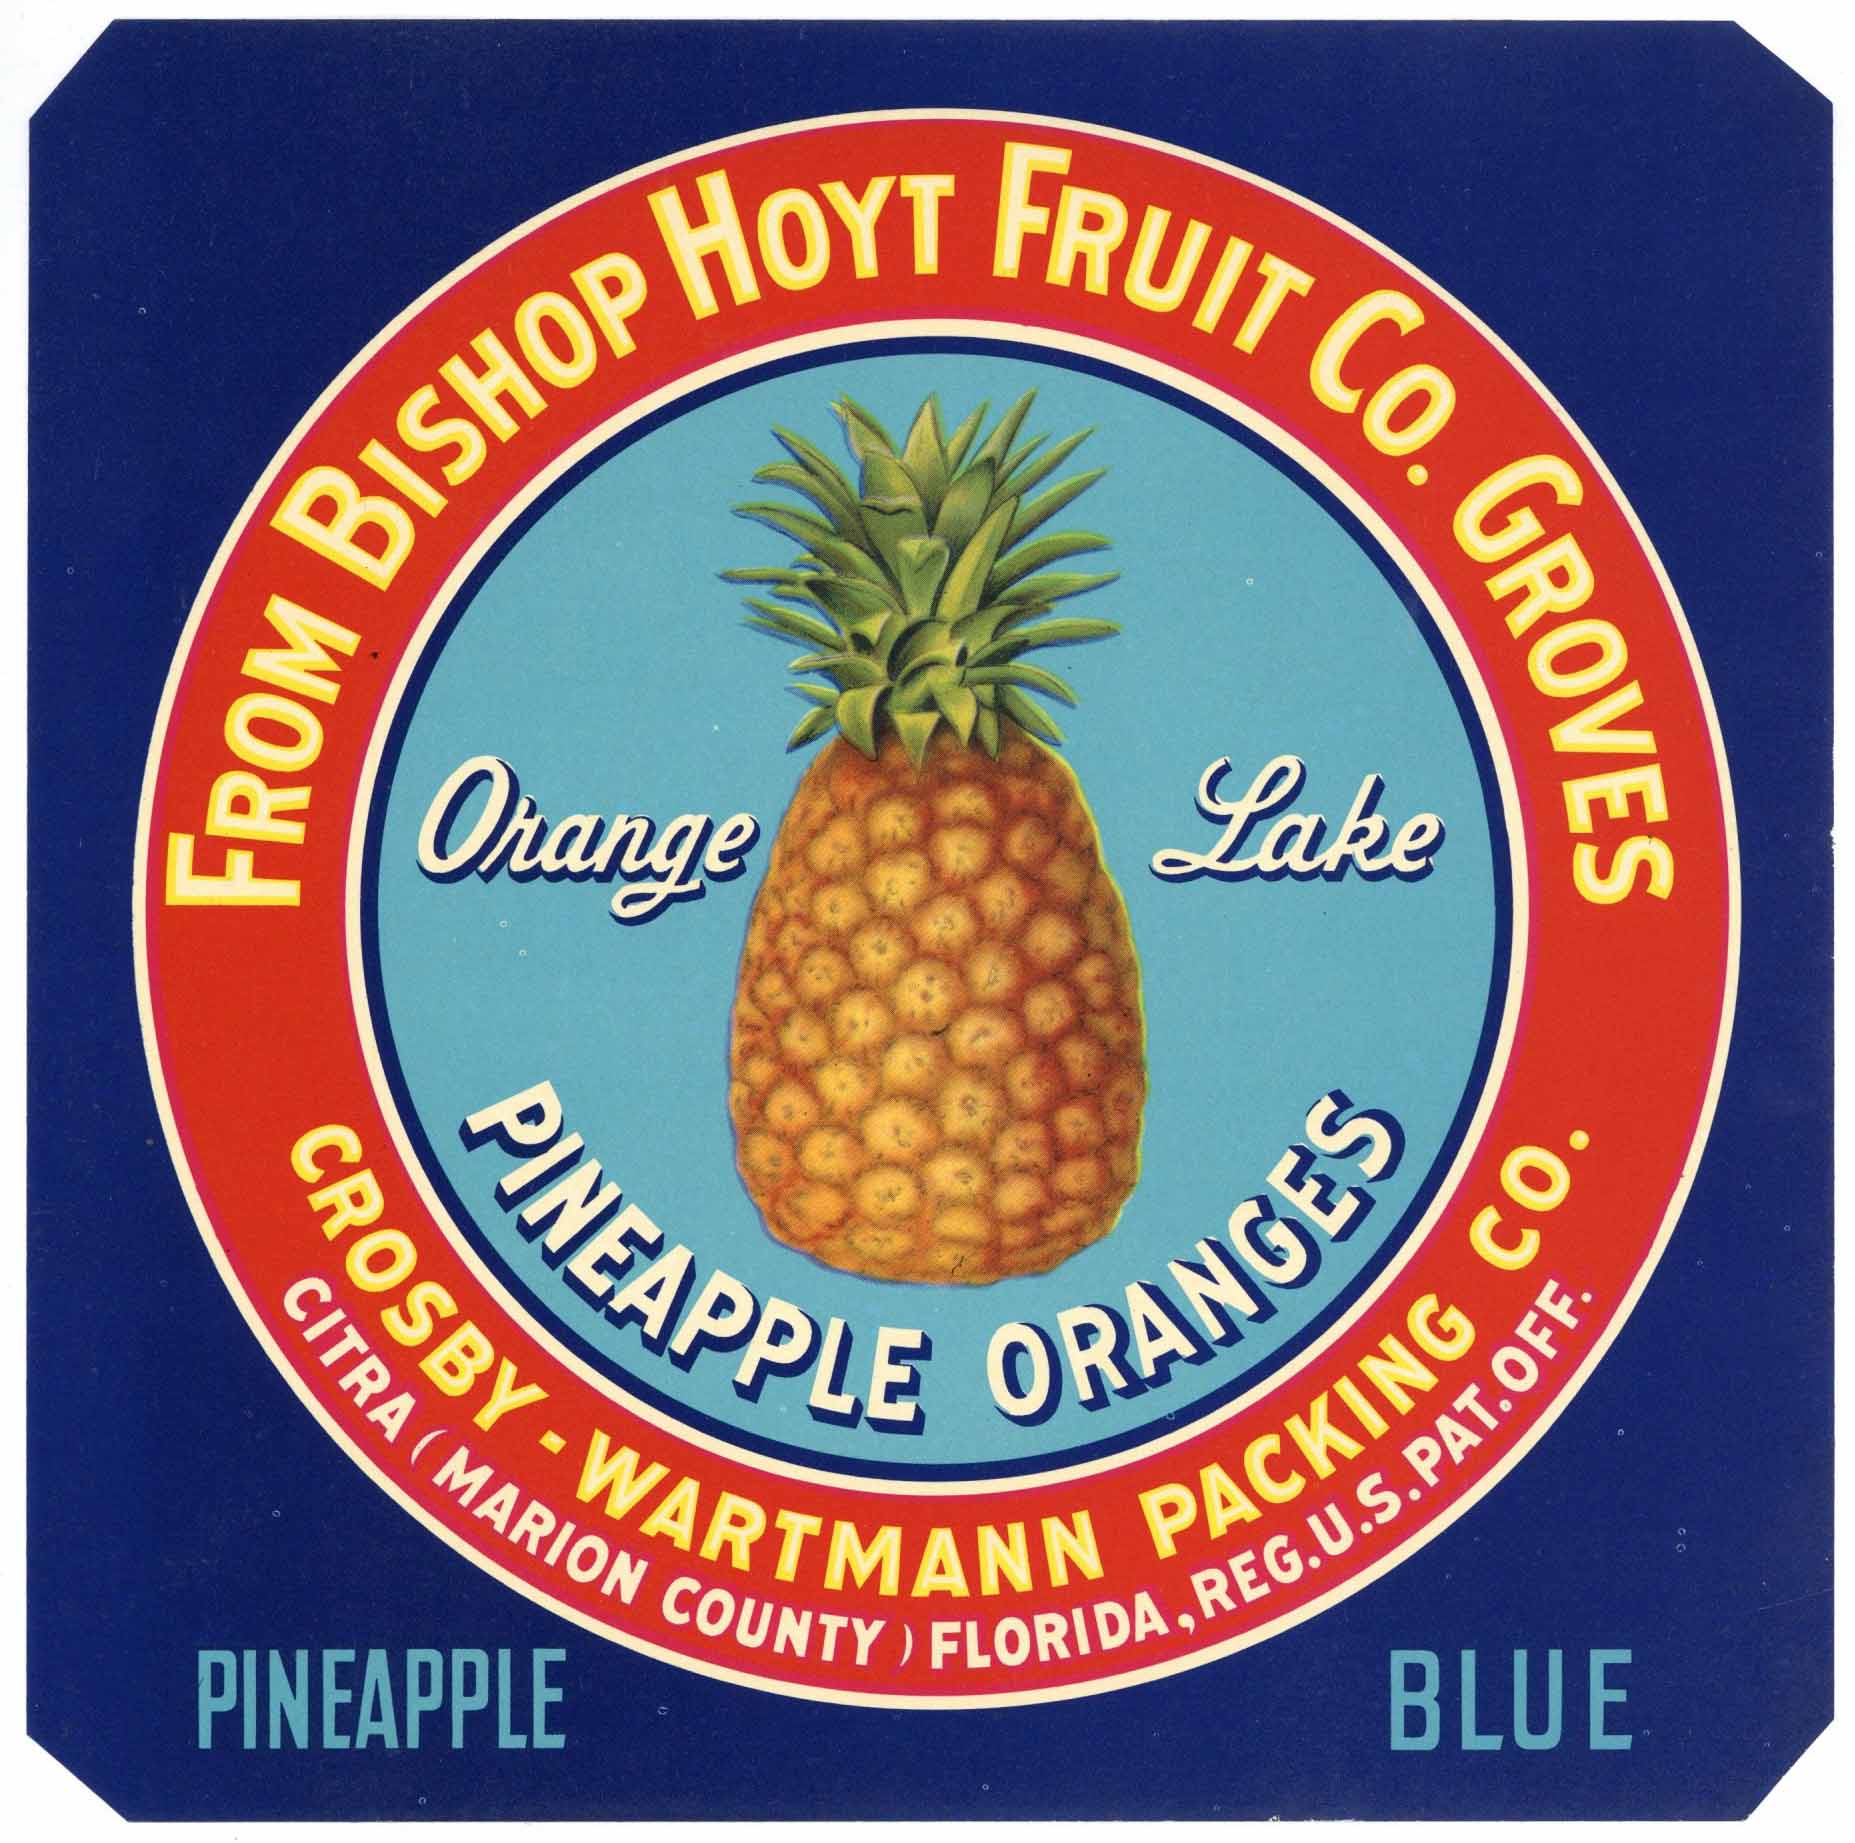 Pineapple Oranges Brand Vintage Citra Florida Citrus Crate Label, blue